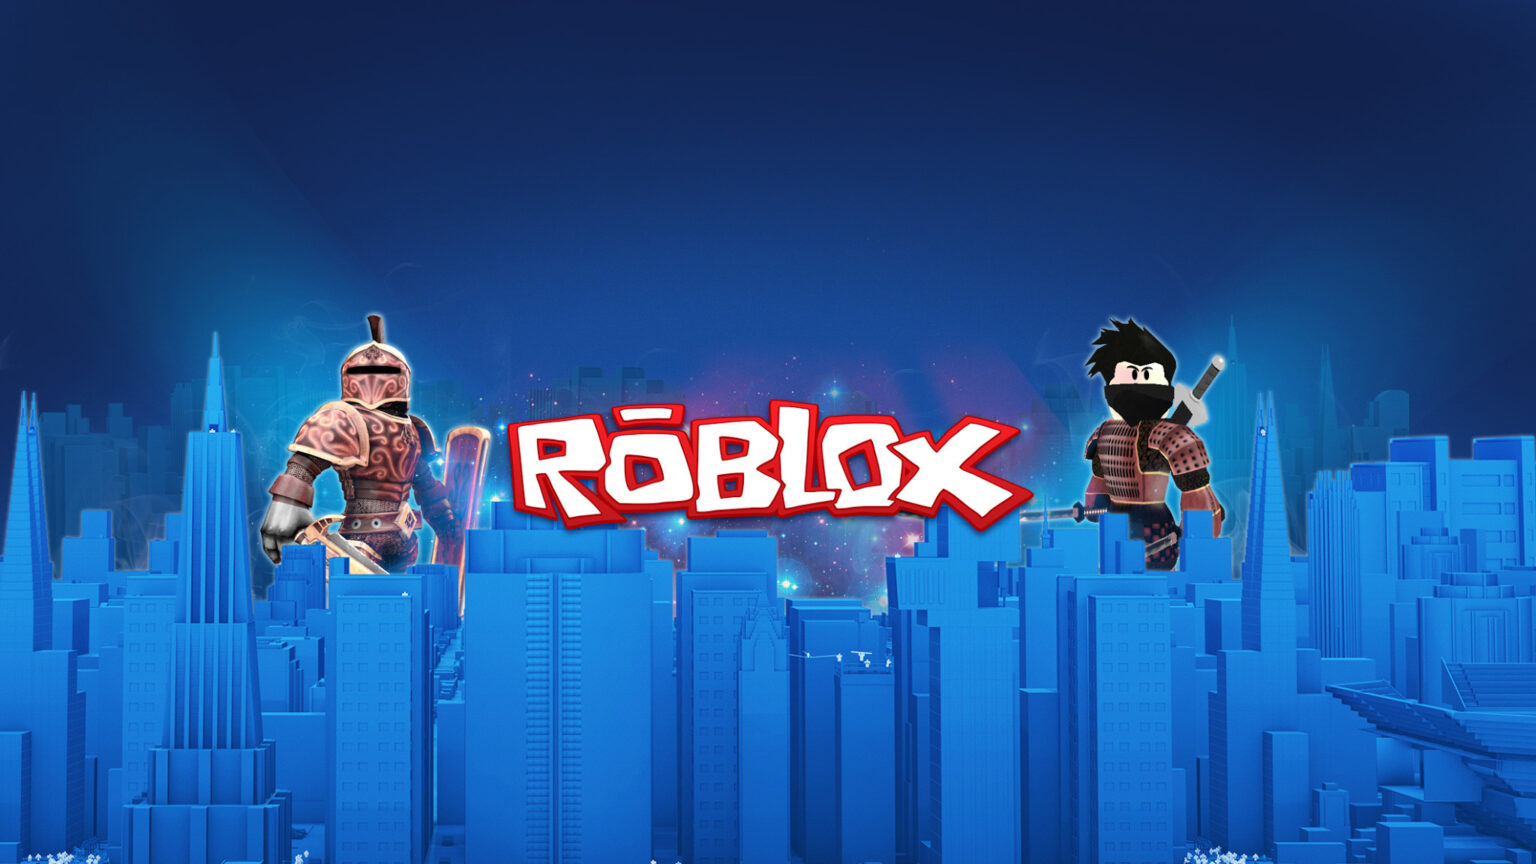 roblox download pc windows 10 free